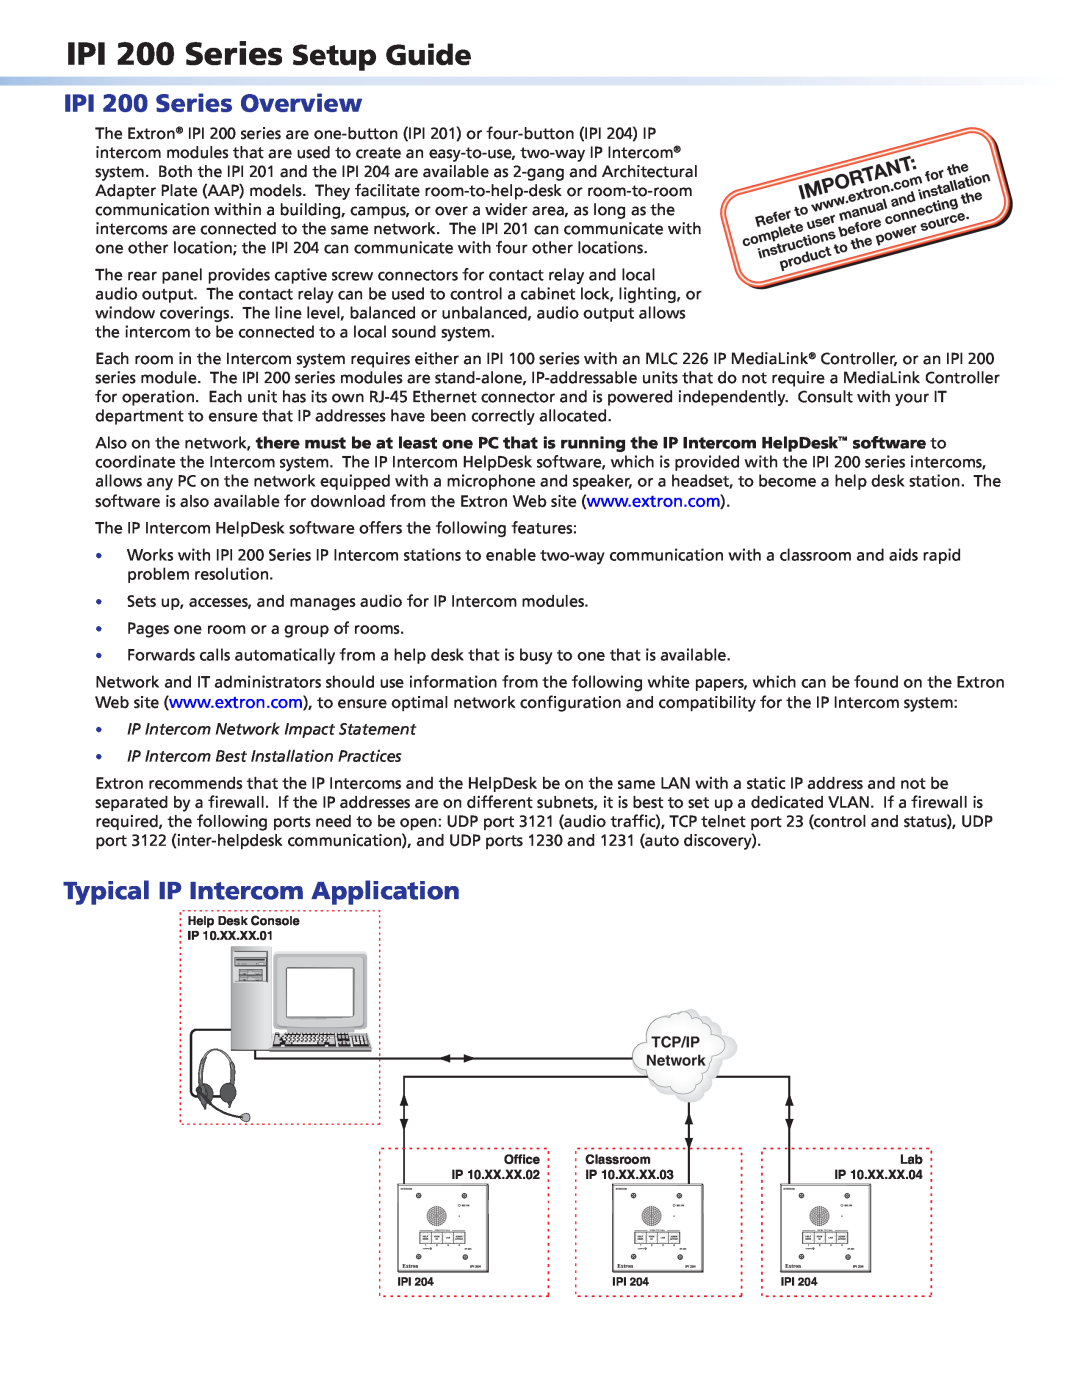 Extron electronic IPI204 setup guide IPI 200 Series Setup Guide, IPI 200 Series Overview, Typical IP Intercom Application 